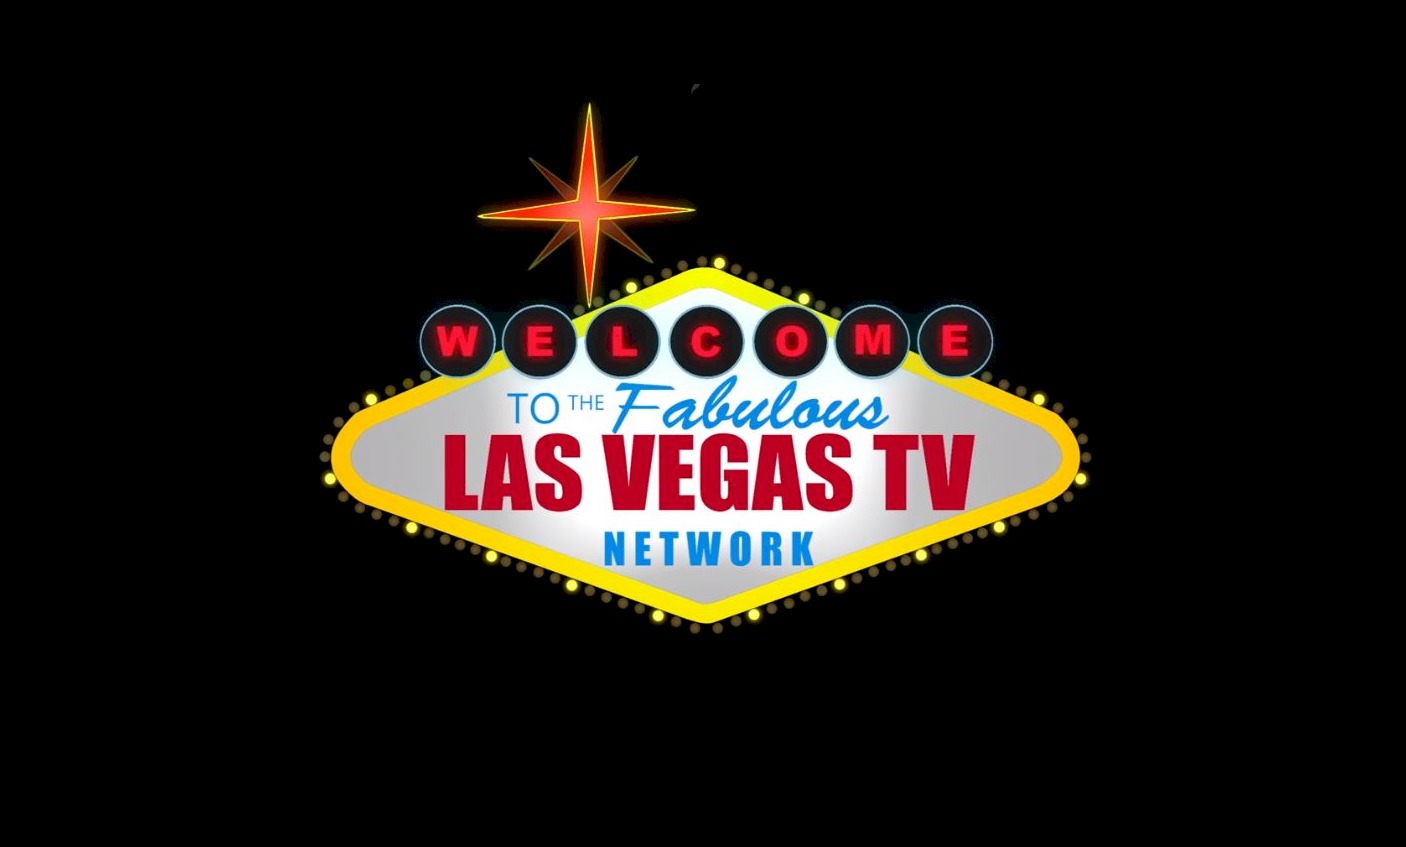 Las Vegas TV Network logo